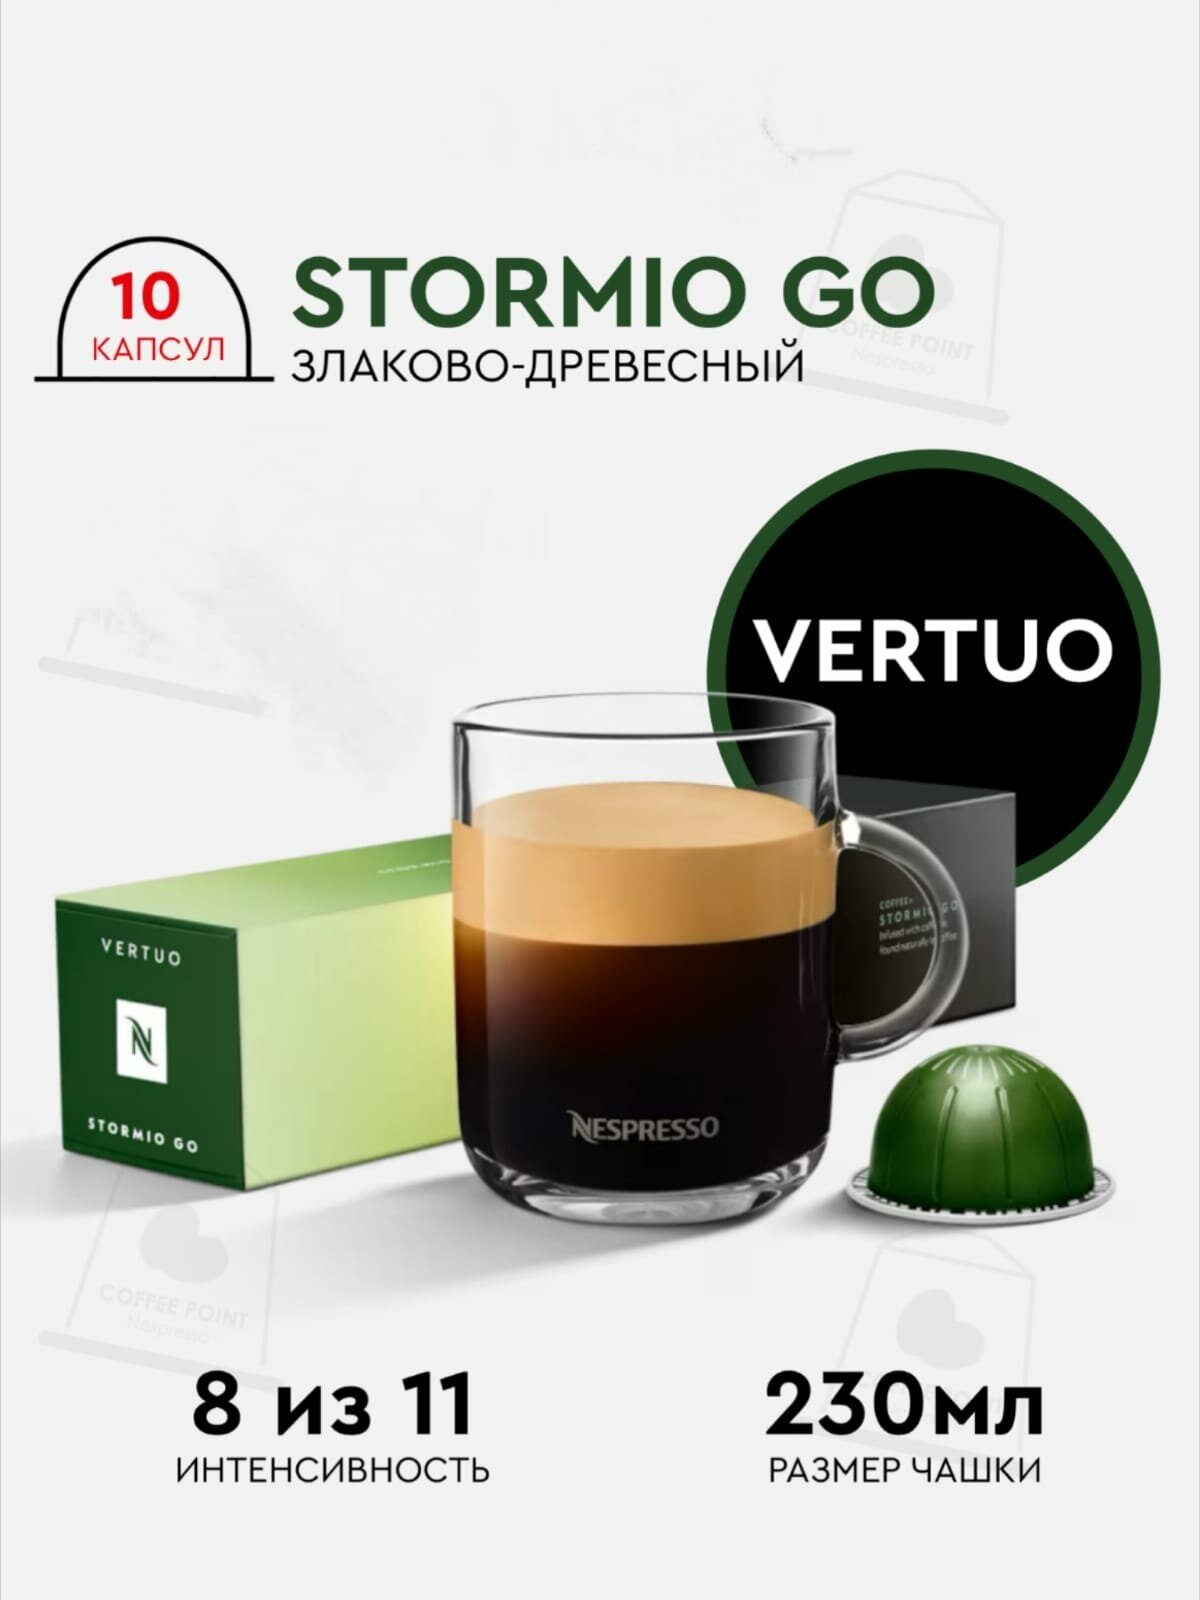 Кофе в капсулах Nespresso Vertuo STORMIO GO, 10 капсул